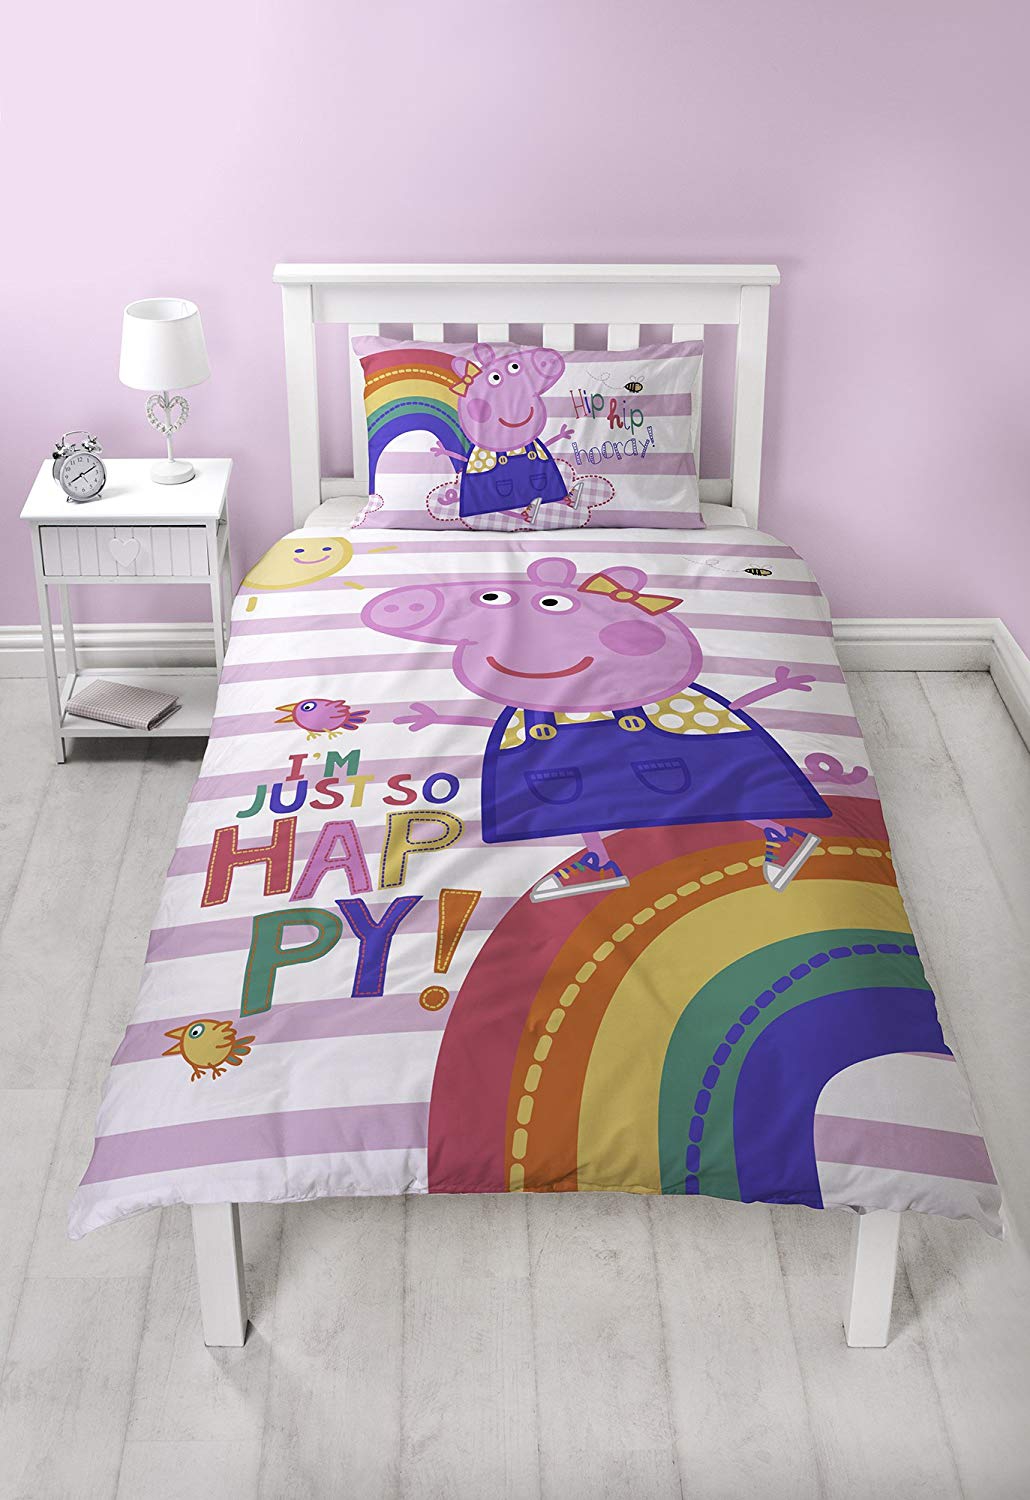 Peppa Pig Friends 'Hooray' Panel Single Bed Duvet Quilt Cover Set